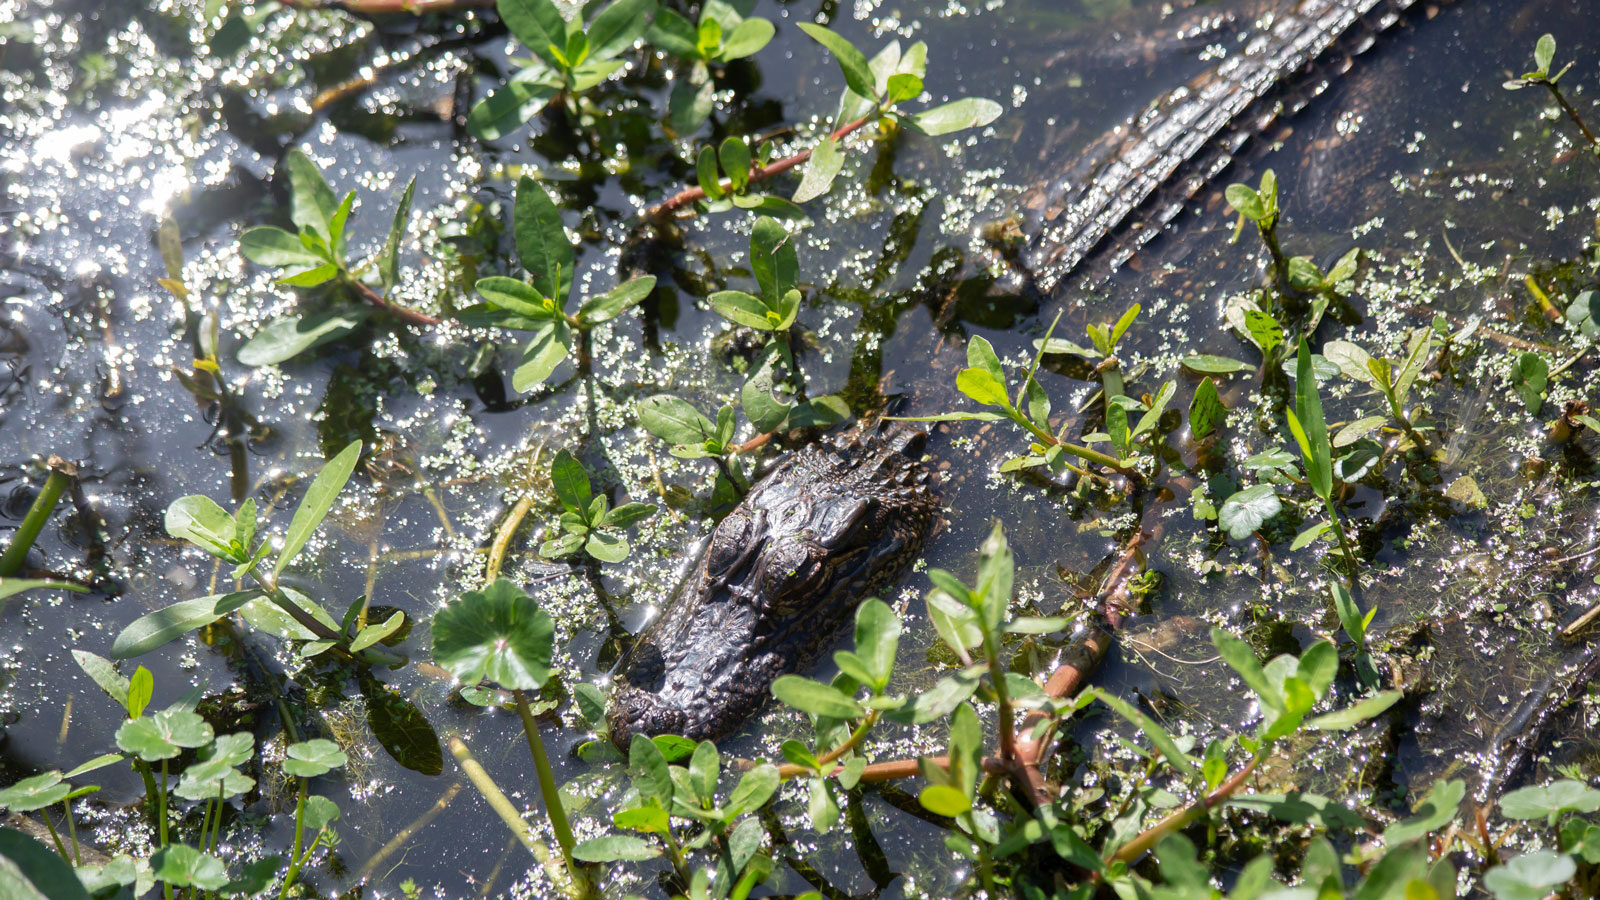 American alligator swimming in vegetation